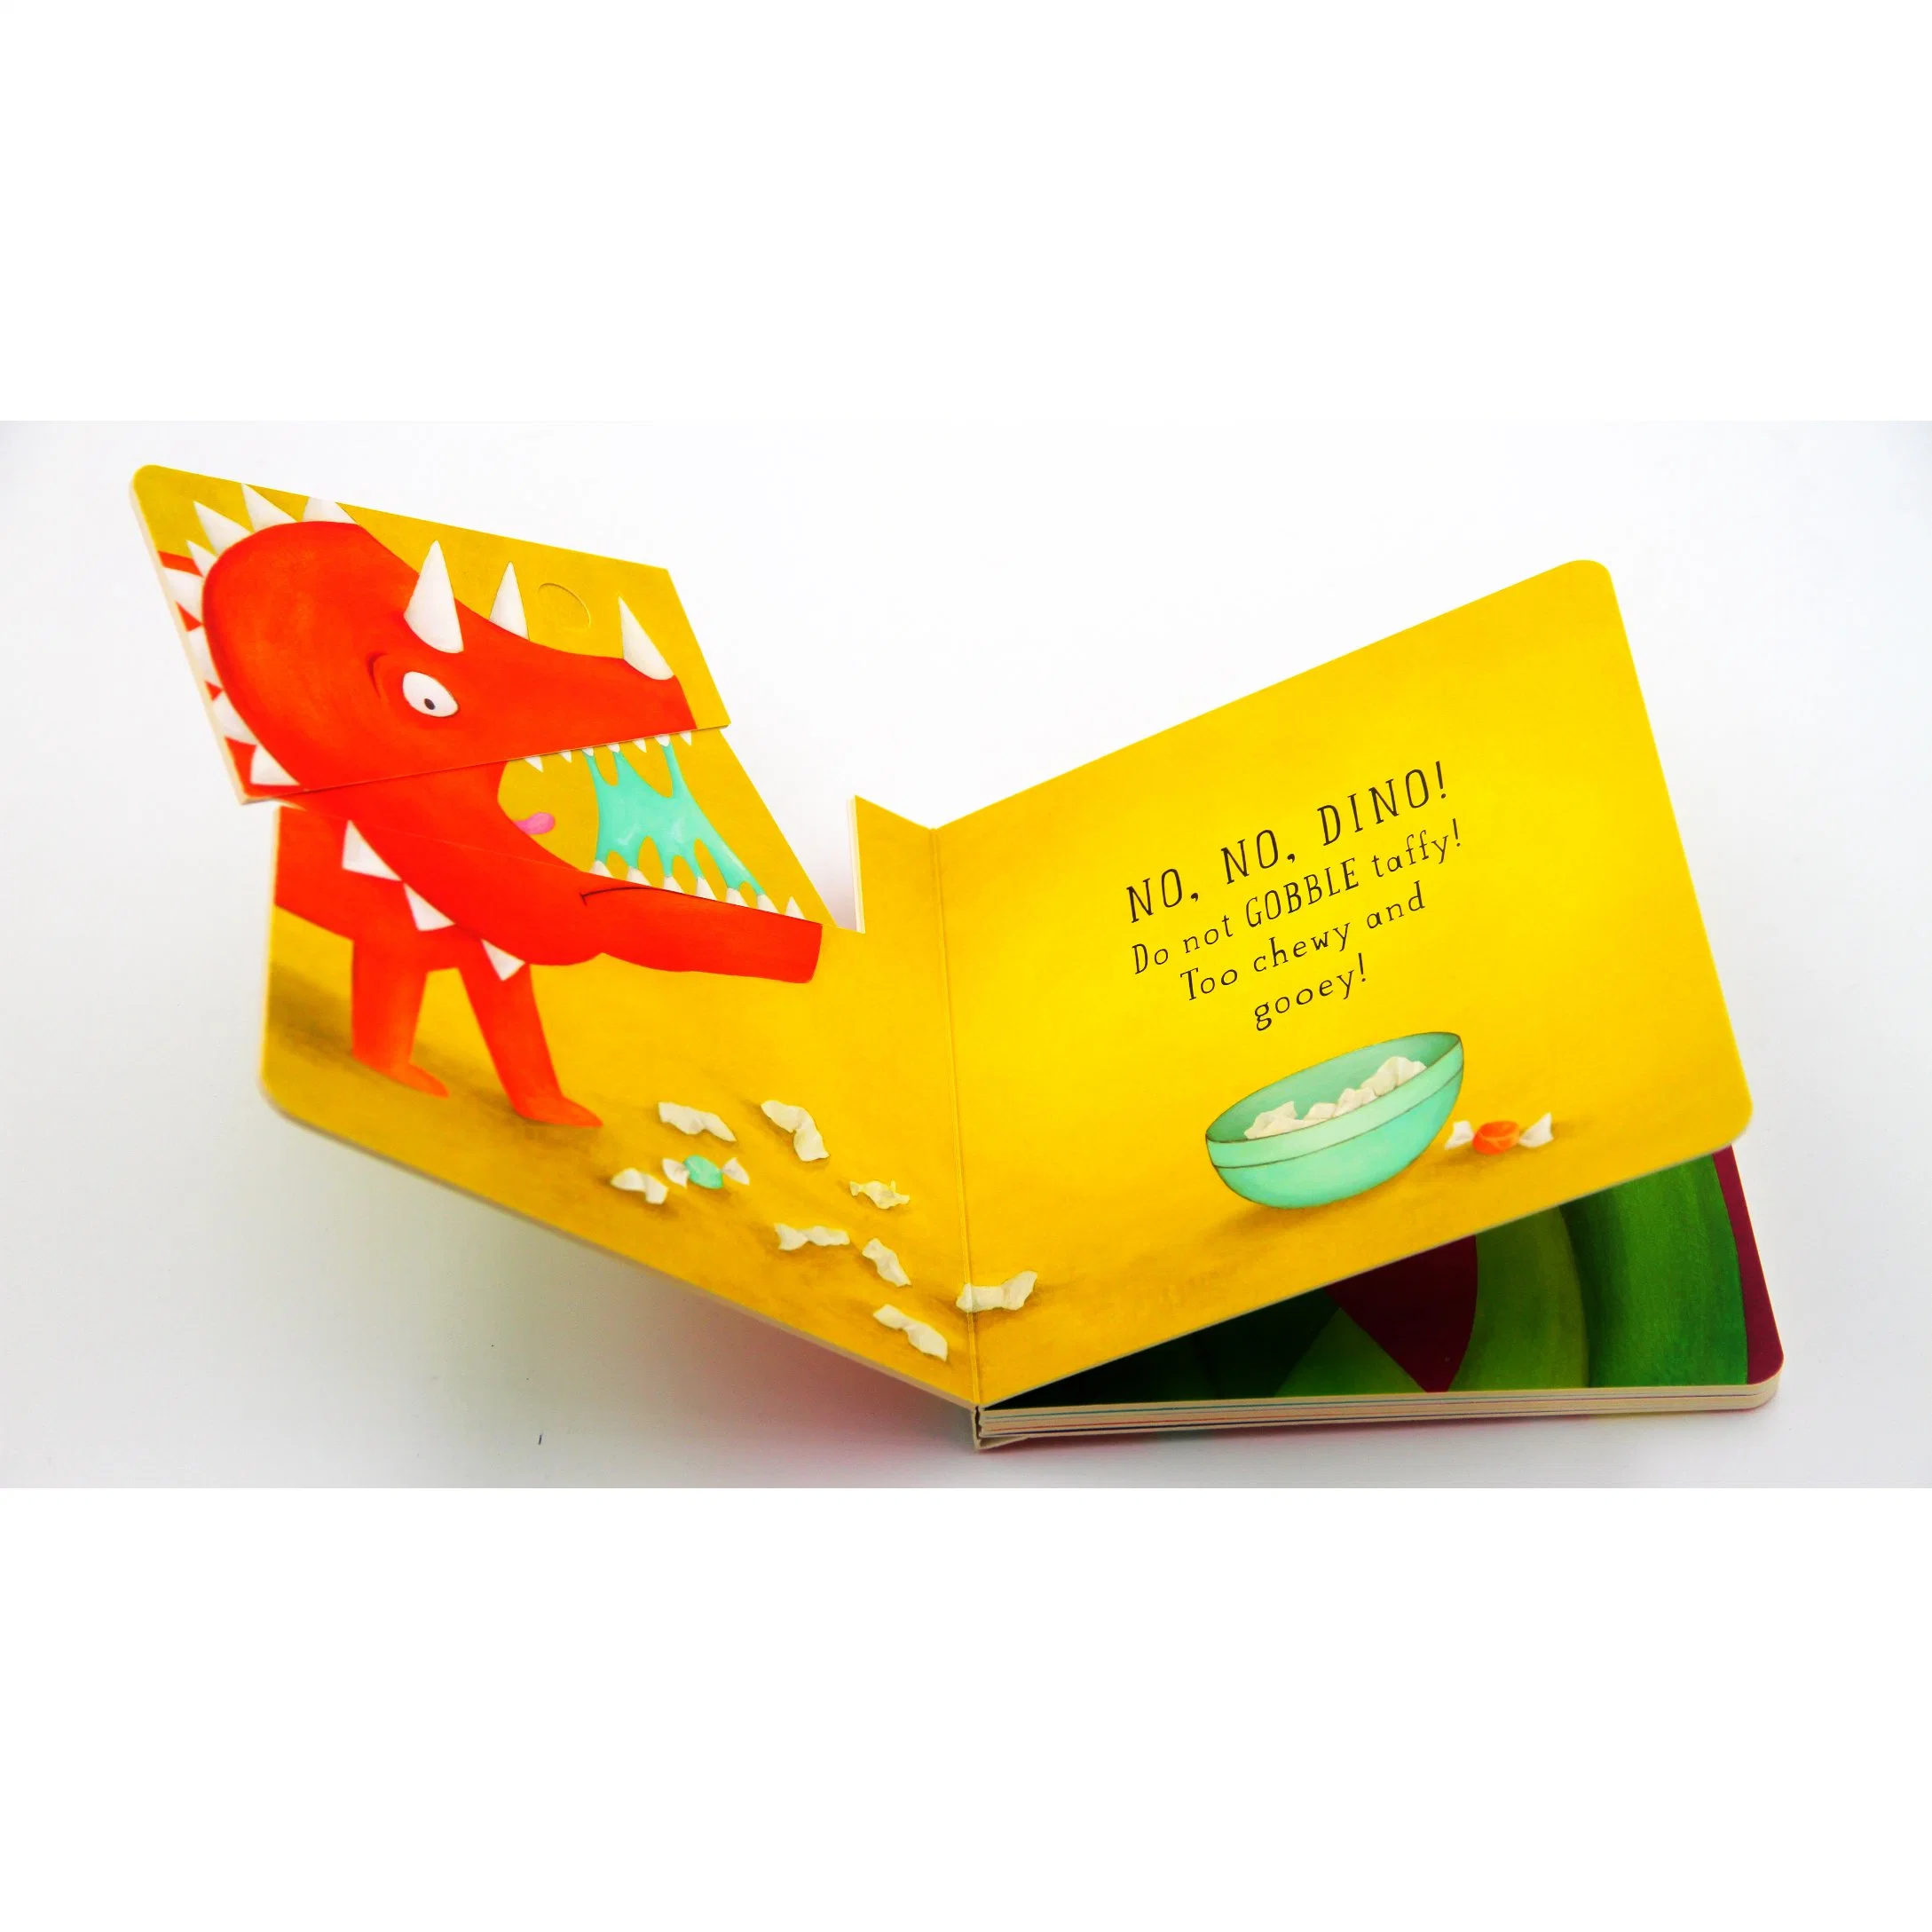 Factory Custom Hardcover Kids Printing Service Full Color Professional Book Printing